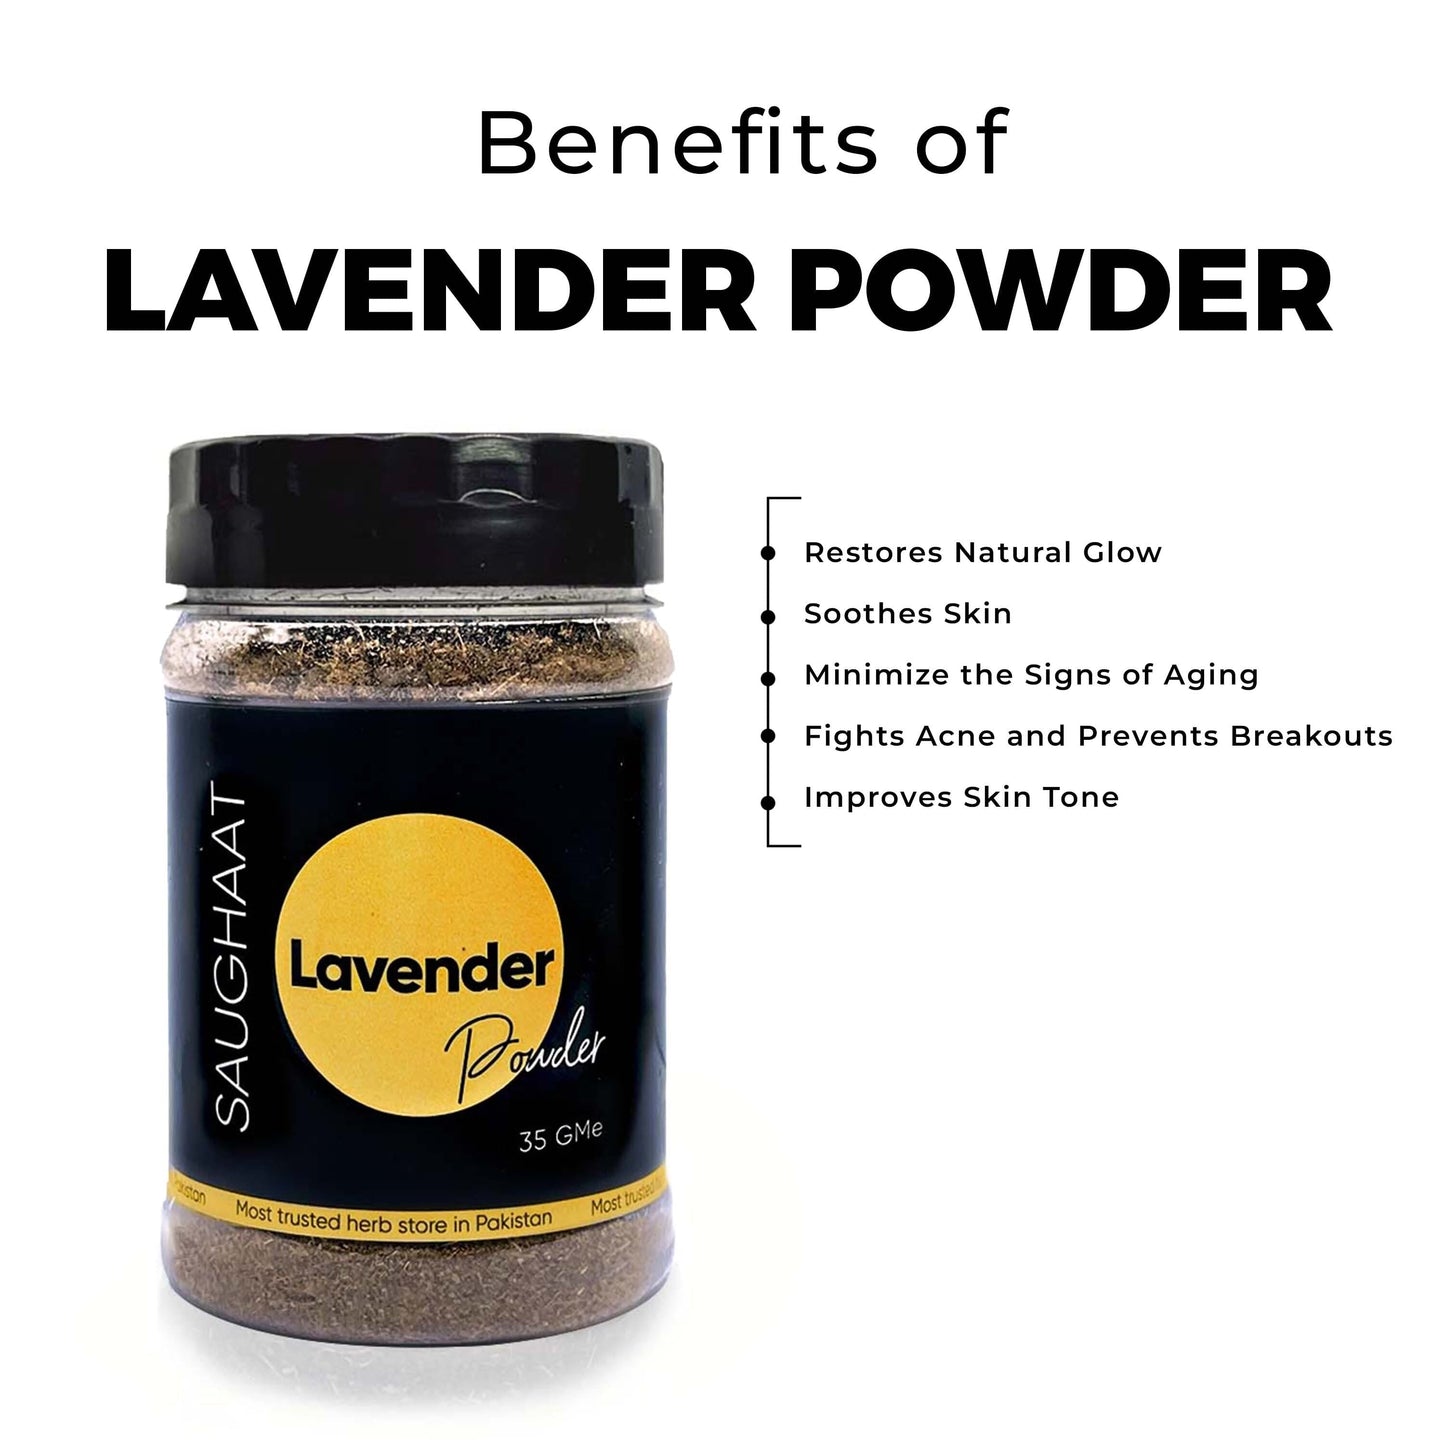 Benefits of Lavender Powder